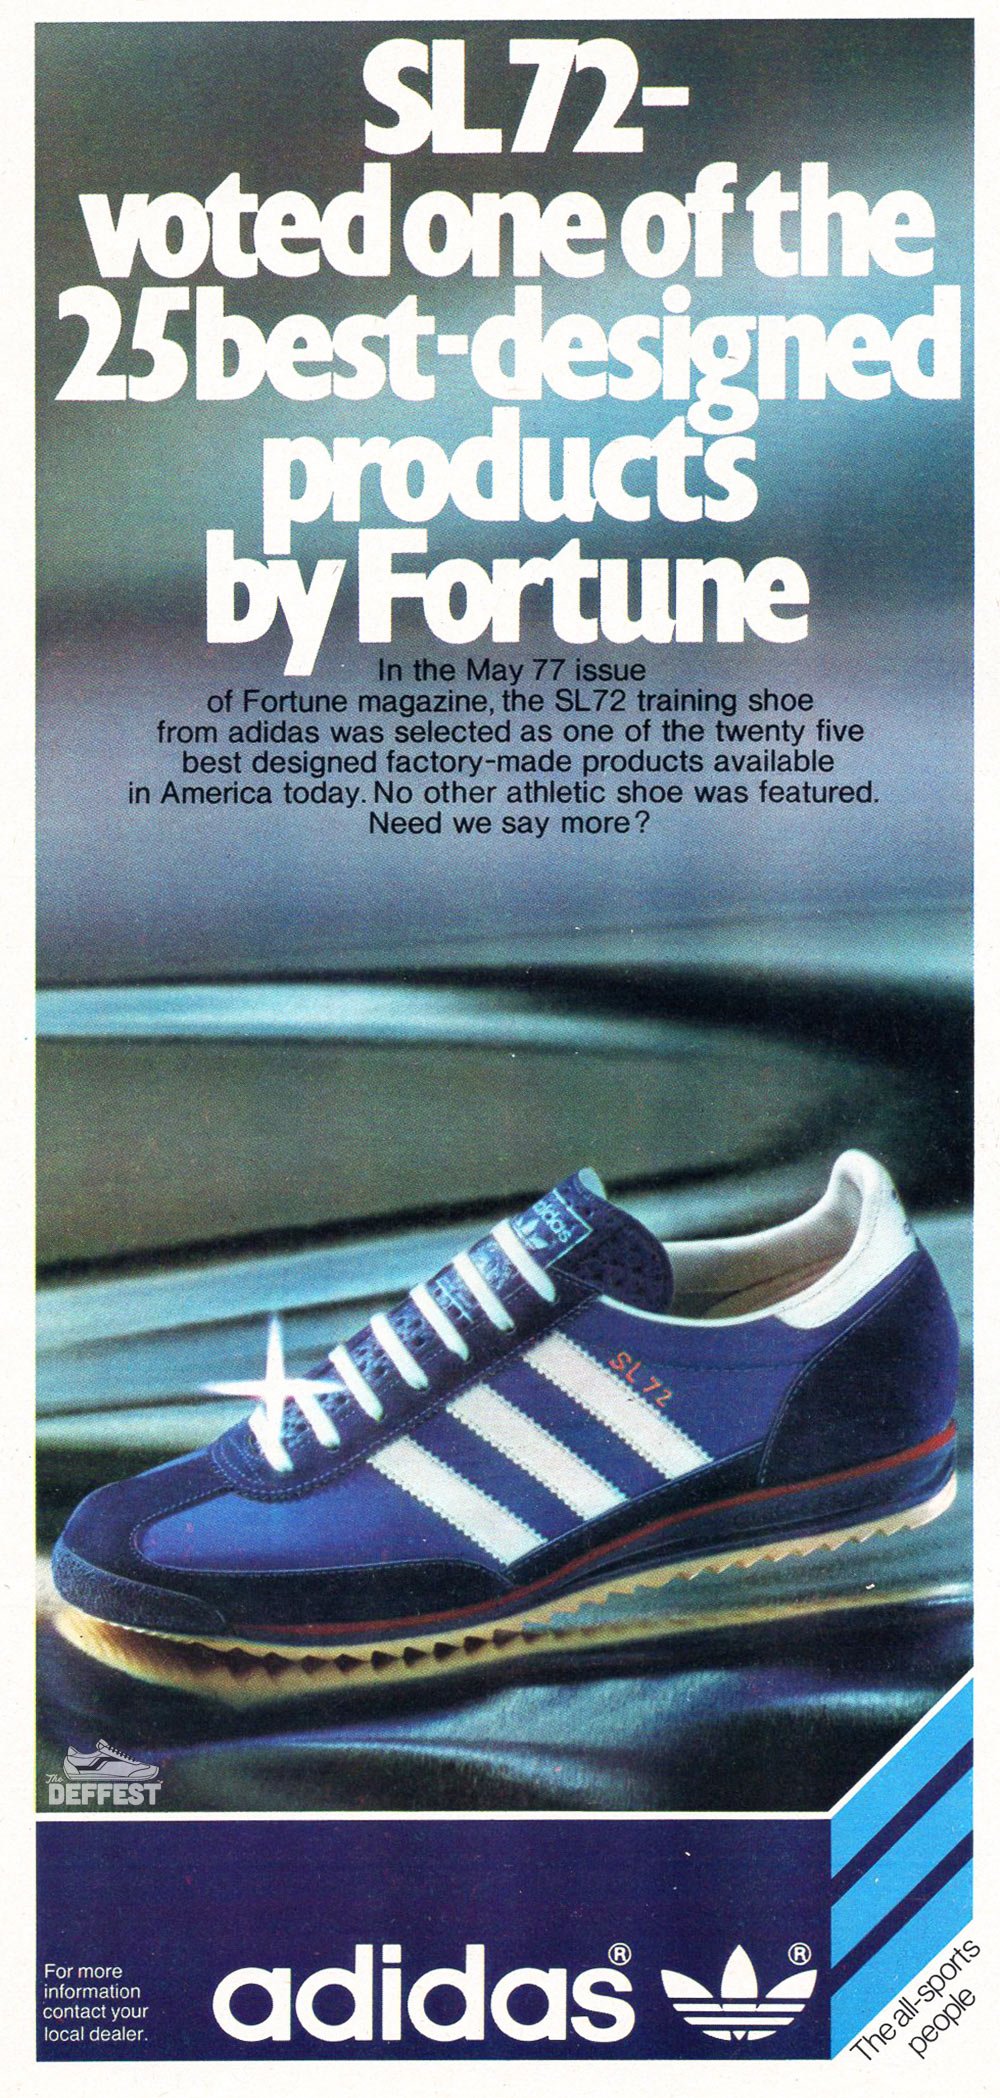 adidas sl72 — The Deffest®. A vintage retro sneaker blog. Ads